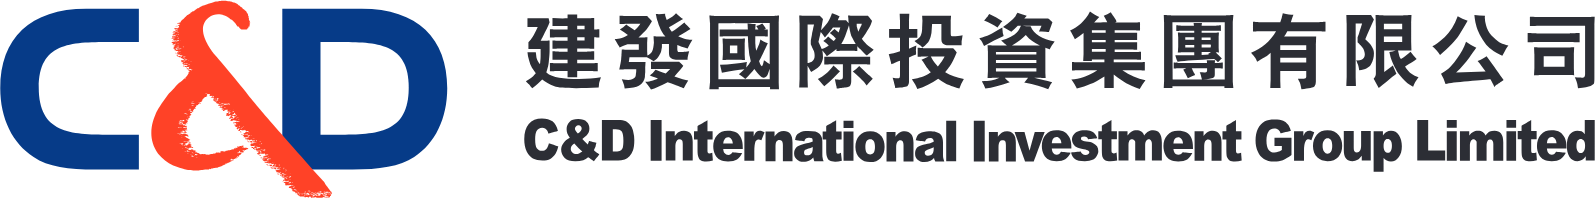 C&D International Investment Group logo large (transparent PNG)